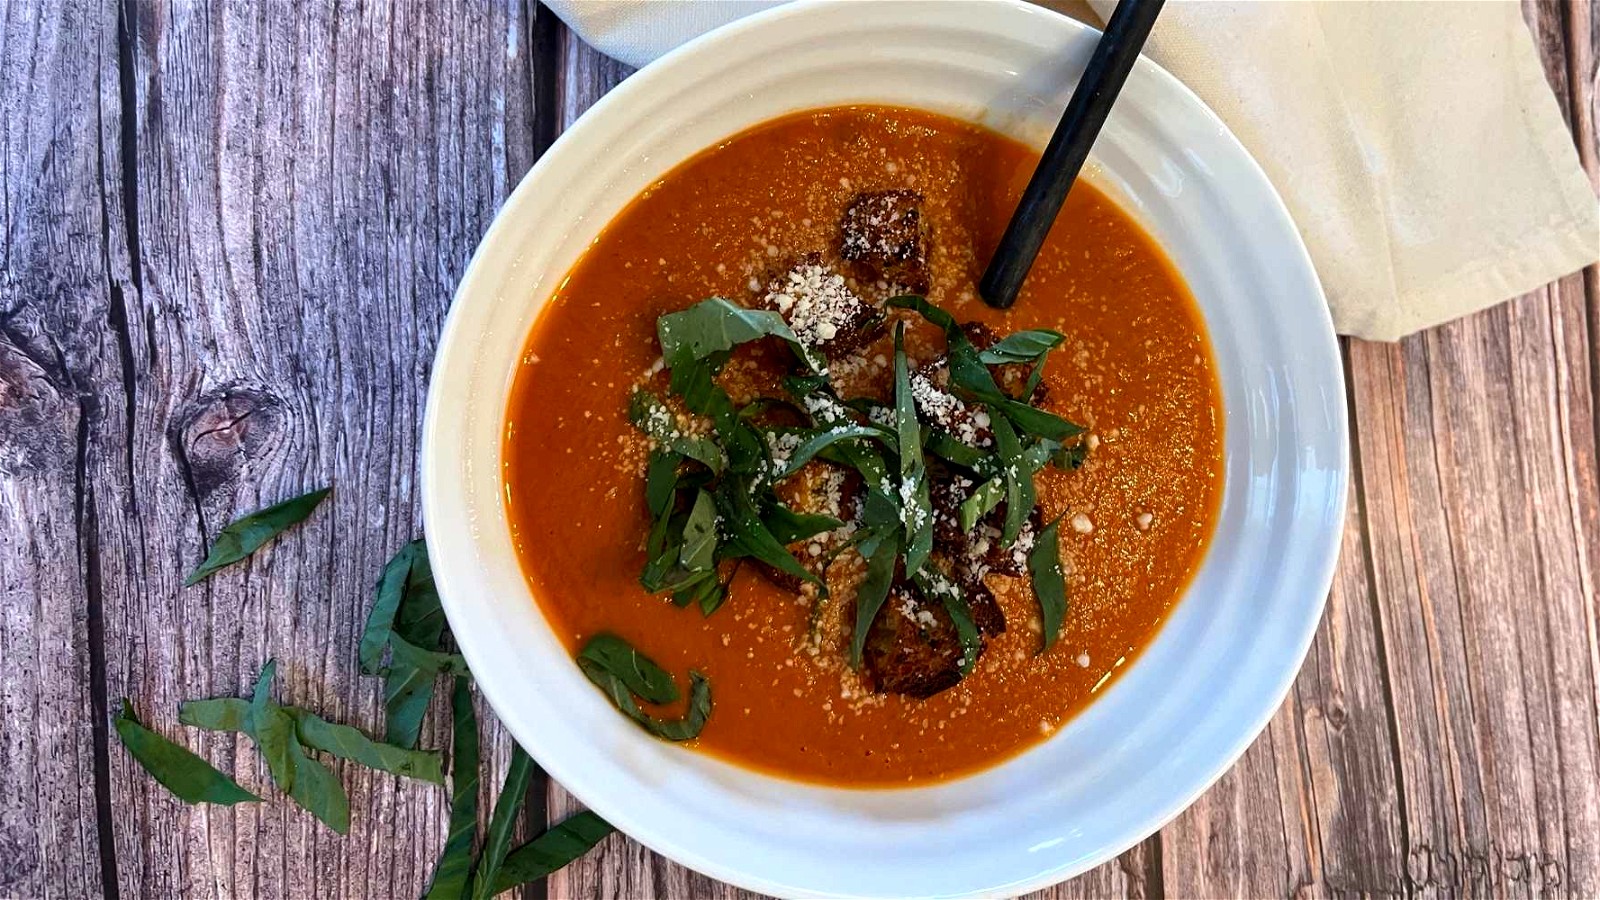 Image of Tomato Basil Soup and Sourdough Croutons